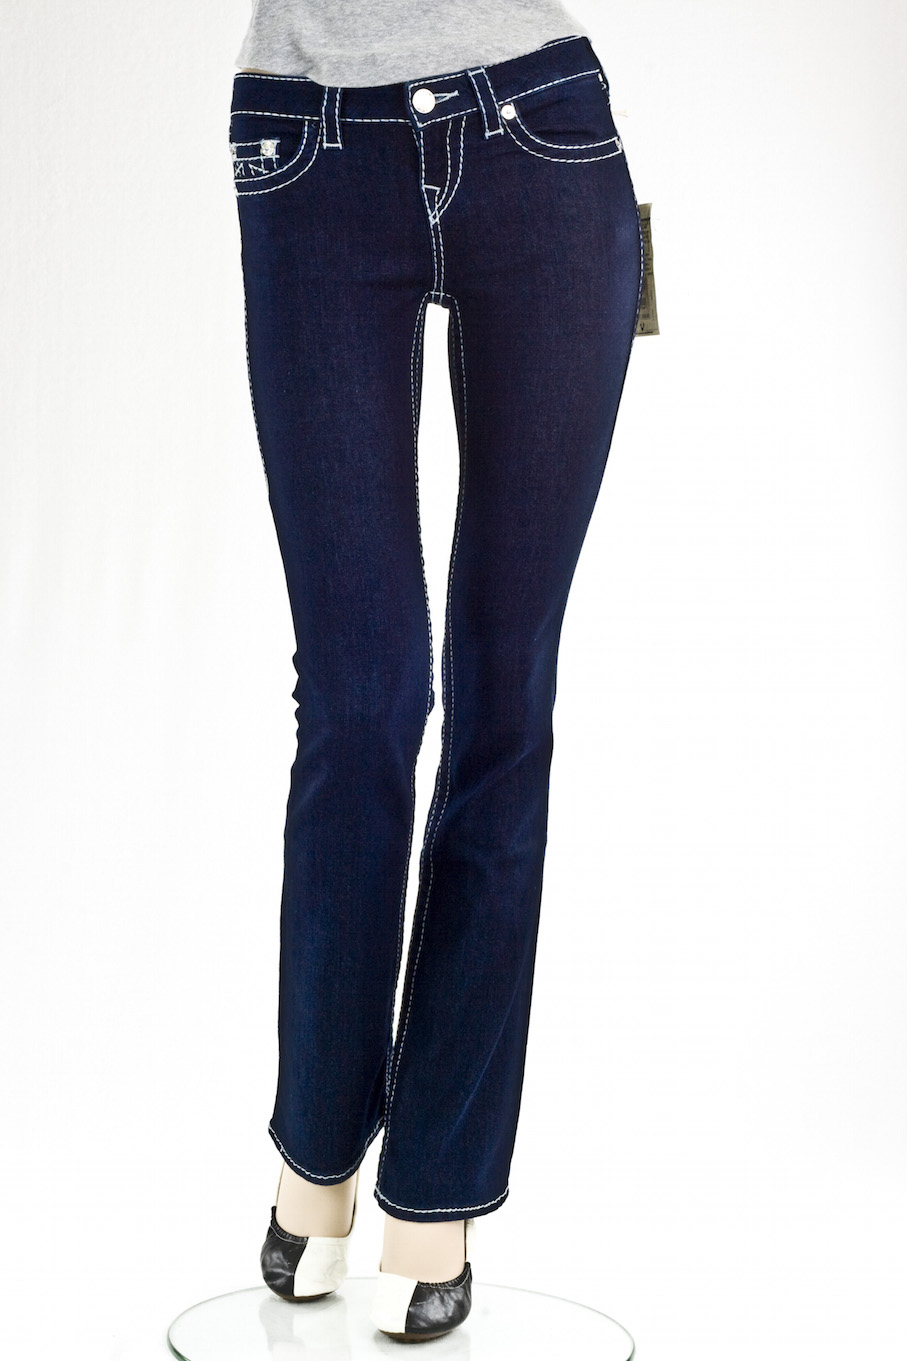 Женские джинсы True Religion "Буткат" Bootcut natural big ta интернет-магазин Fashion Jeans